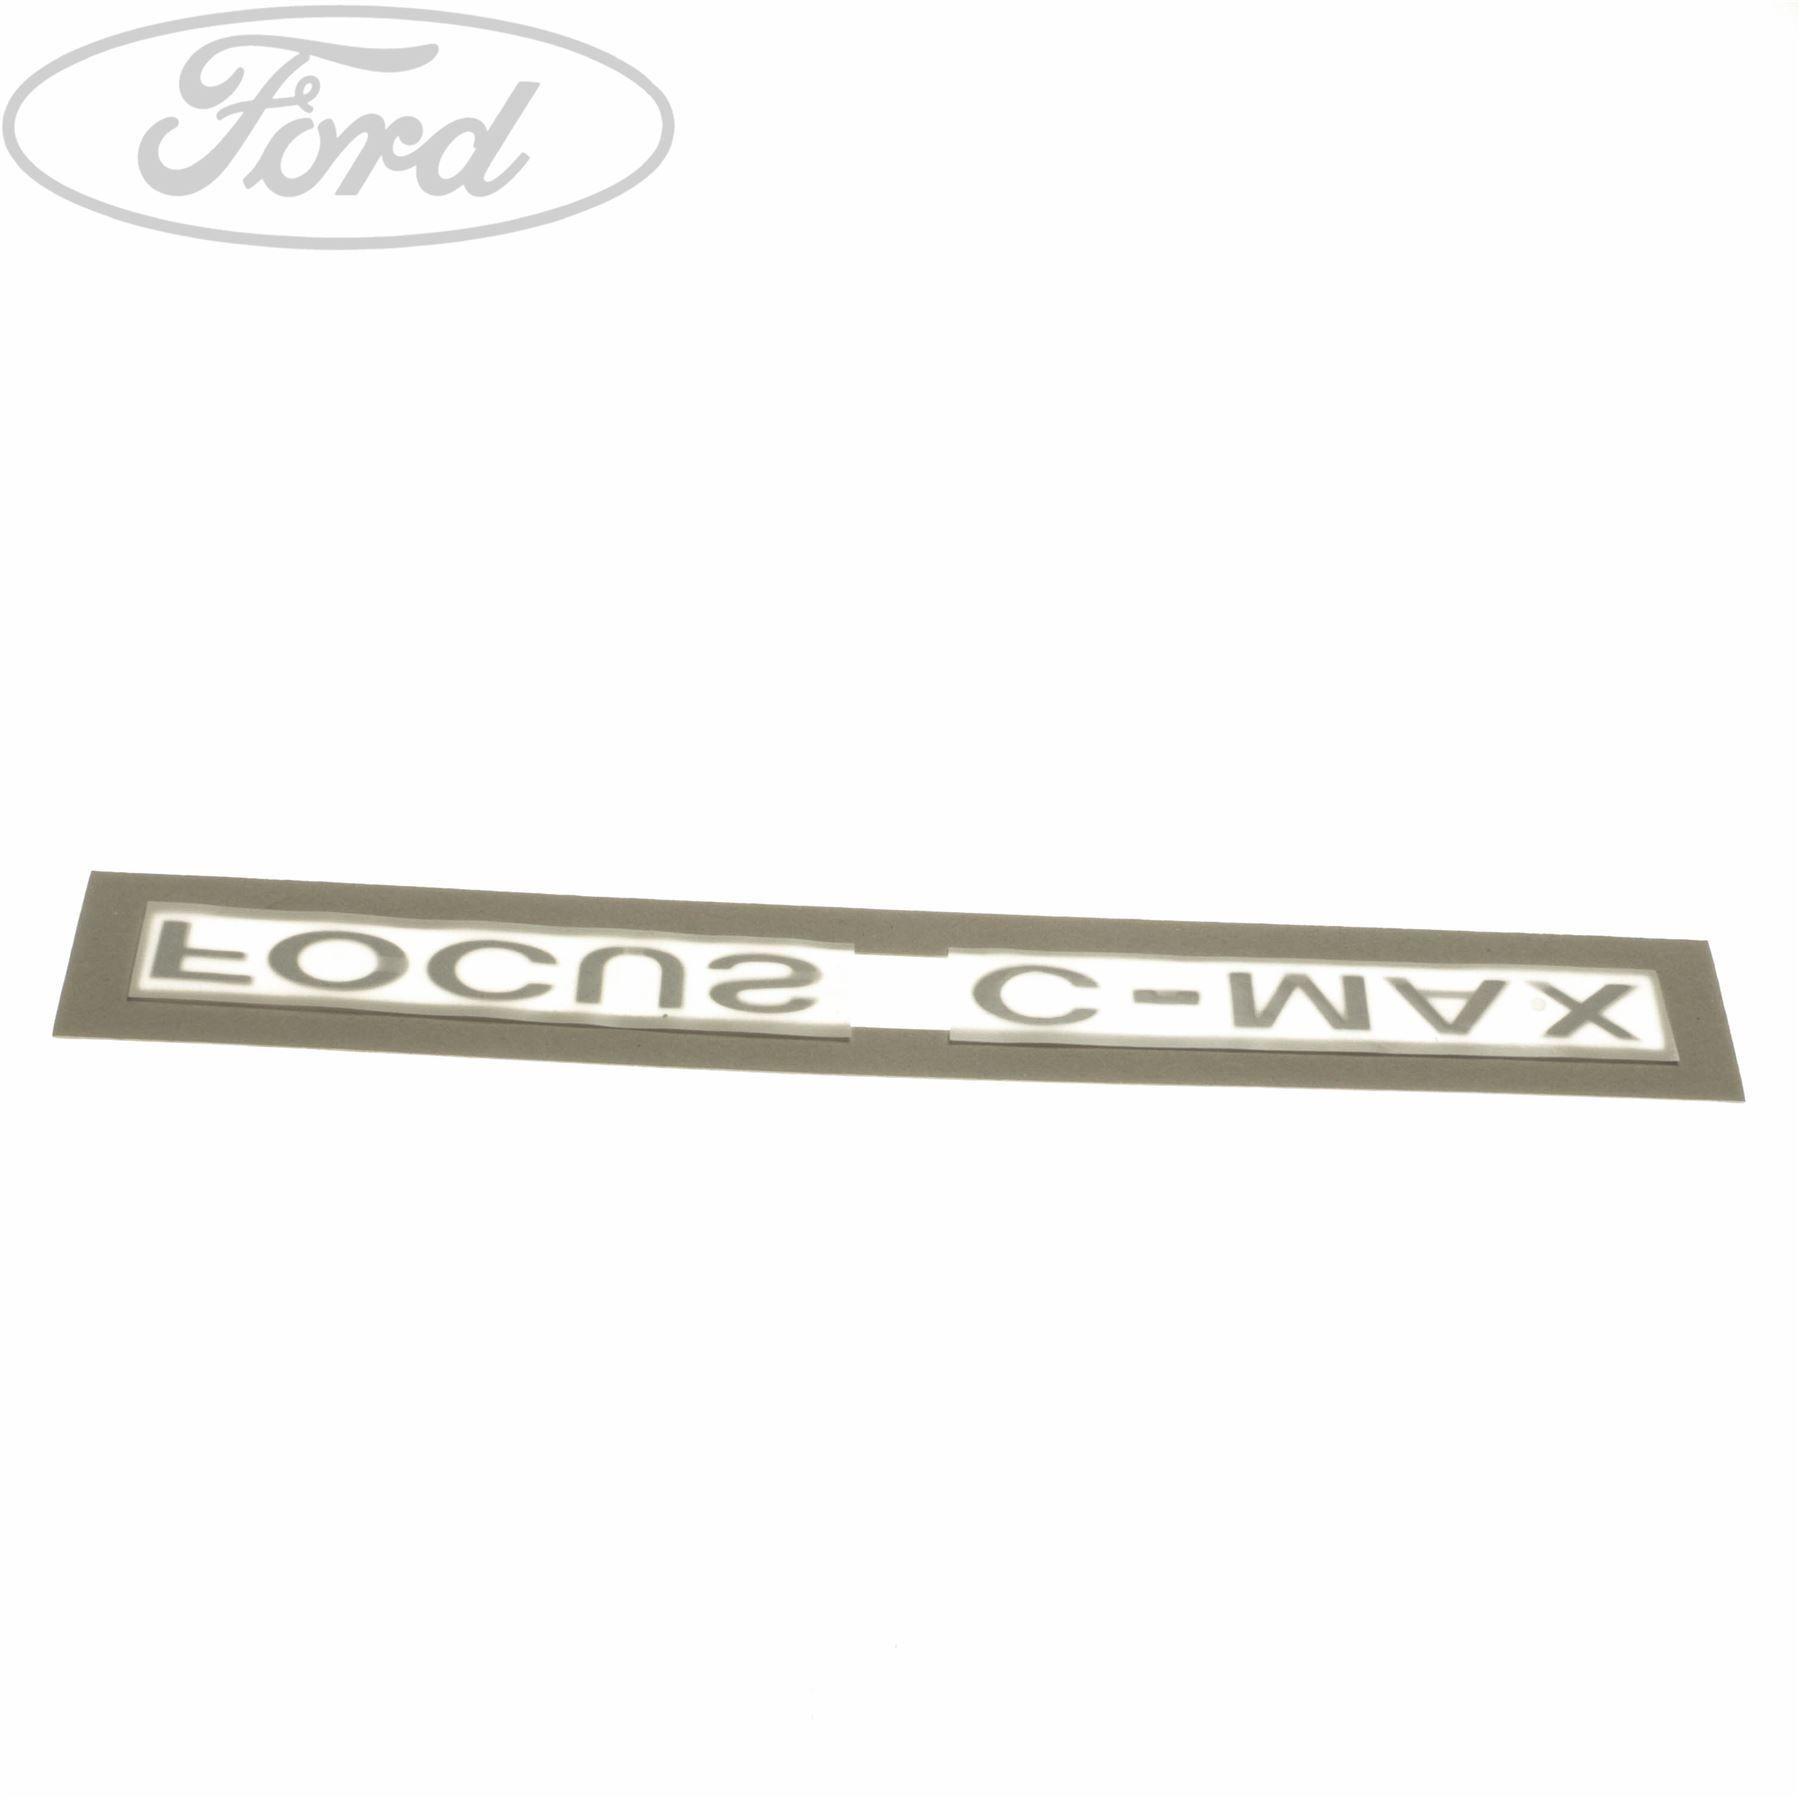 Ford C-Max Logo - Genuine Ford Focus C-Max Focus Tailgate Name Plate Badge Emblem ...